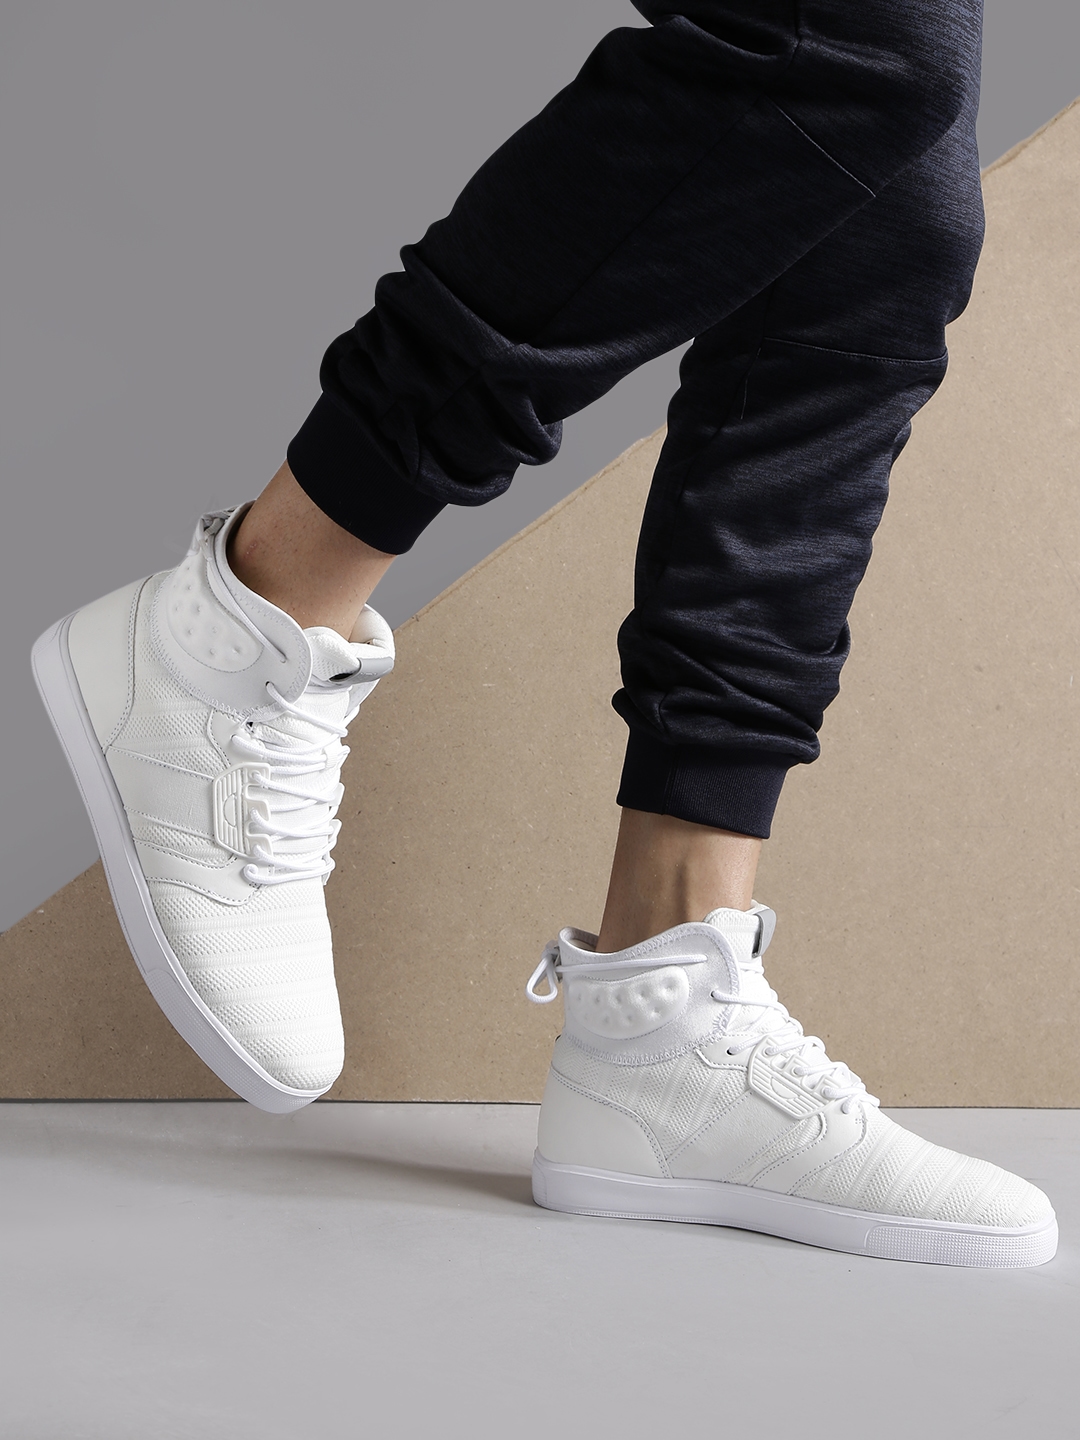 white shoes hrx online -